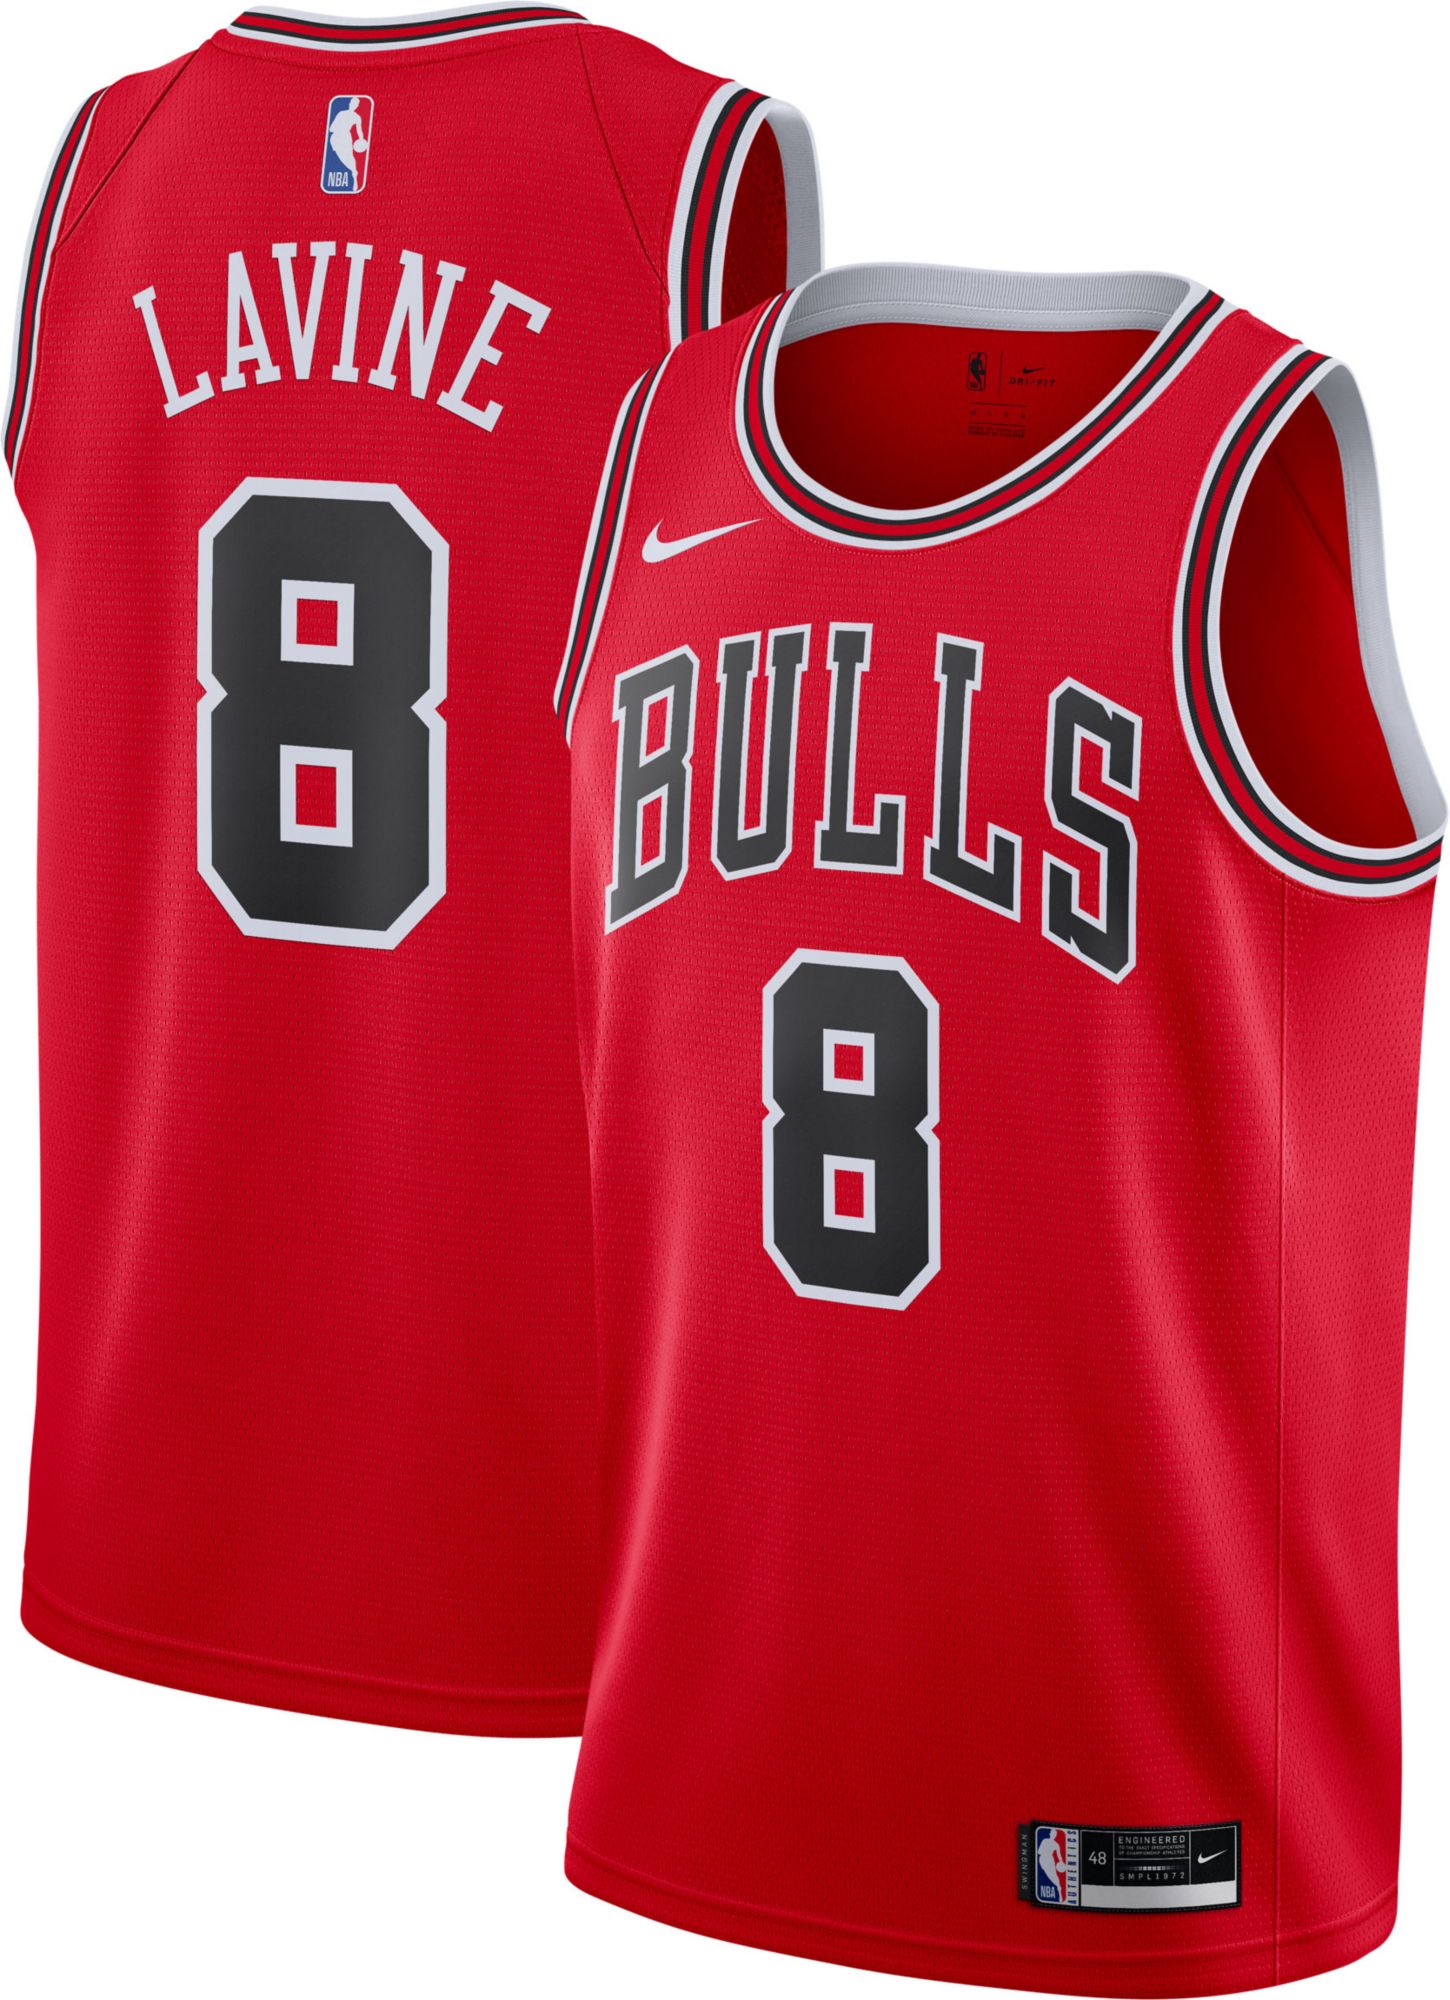 Chicago Bulls Nike Replica Box Set - Zach lavine - Toddler